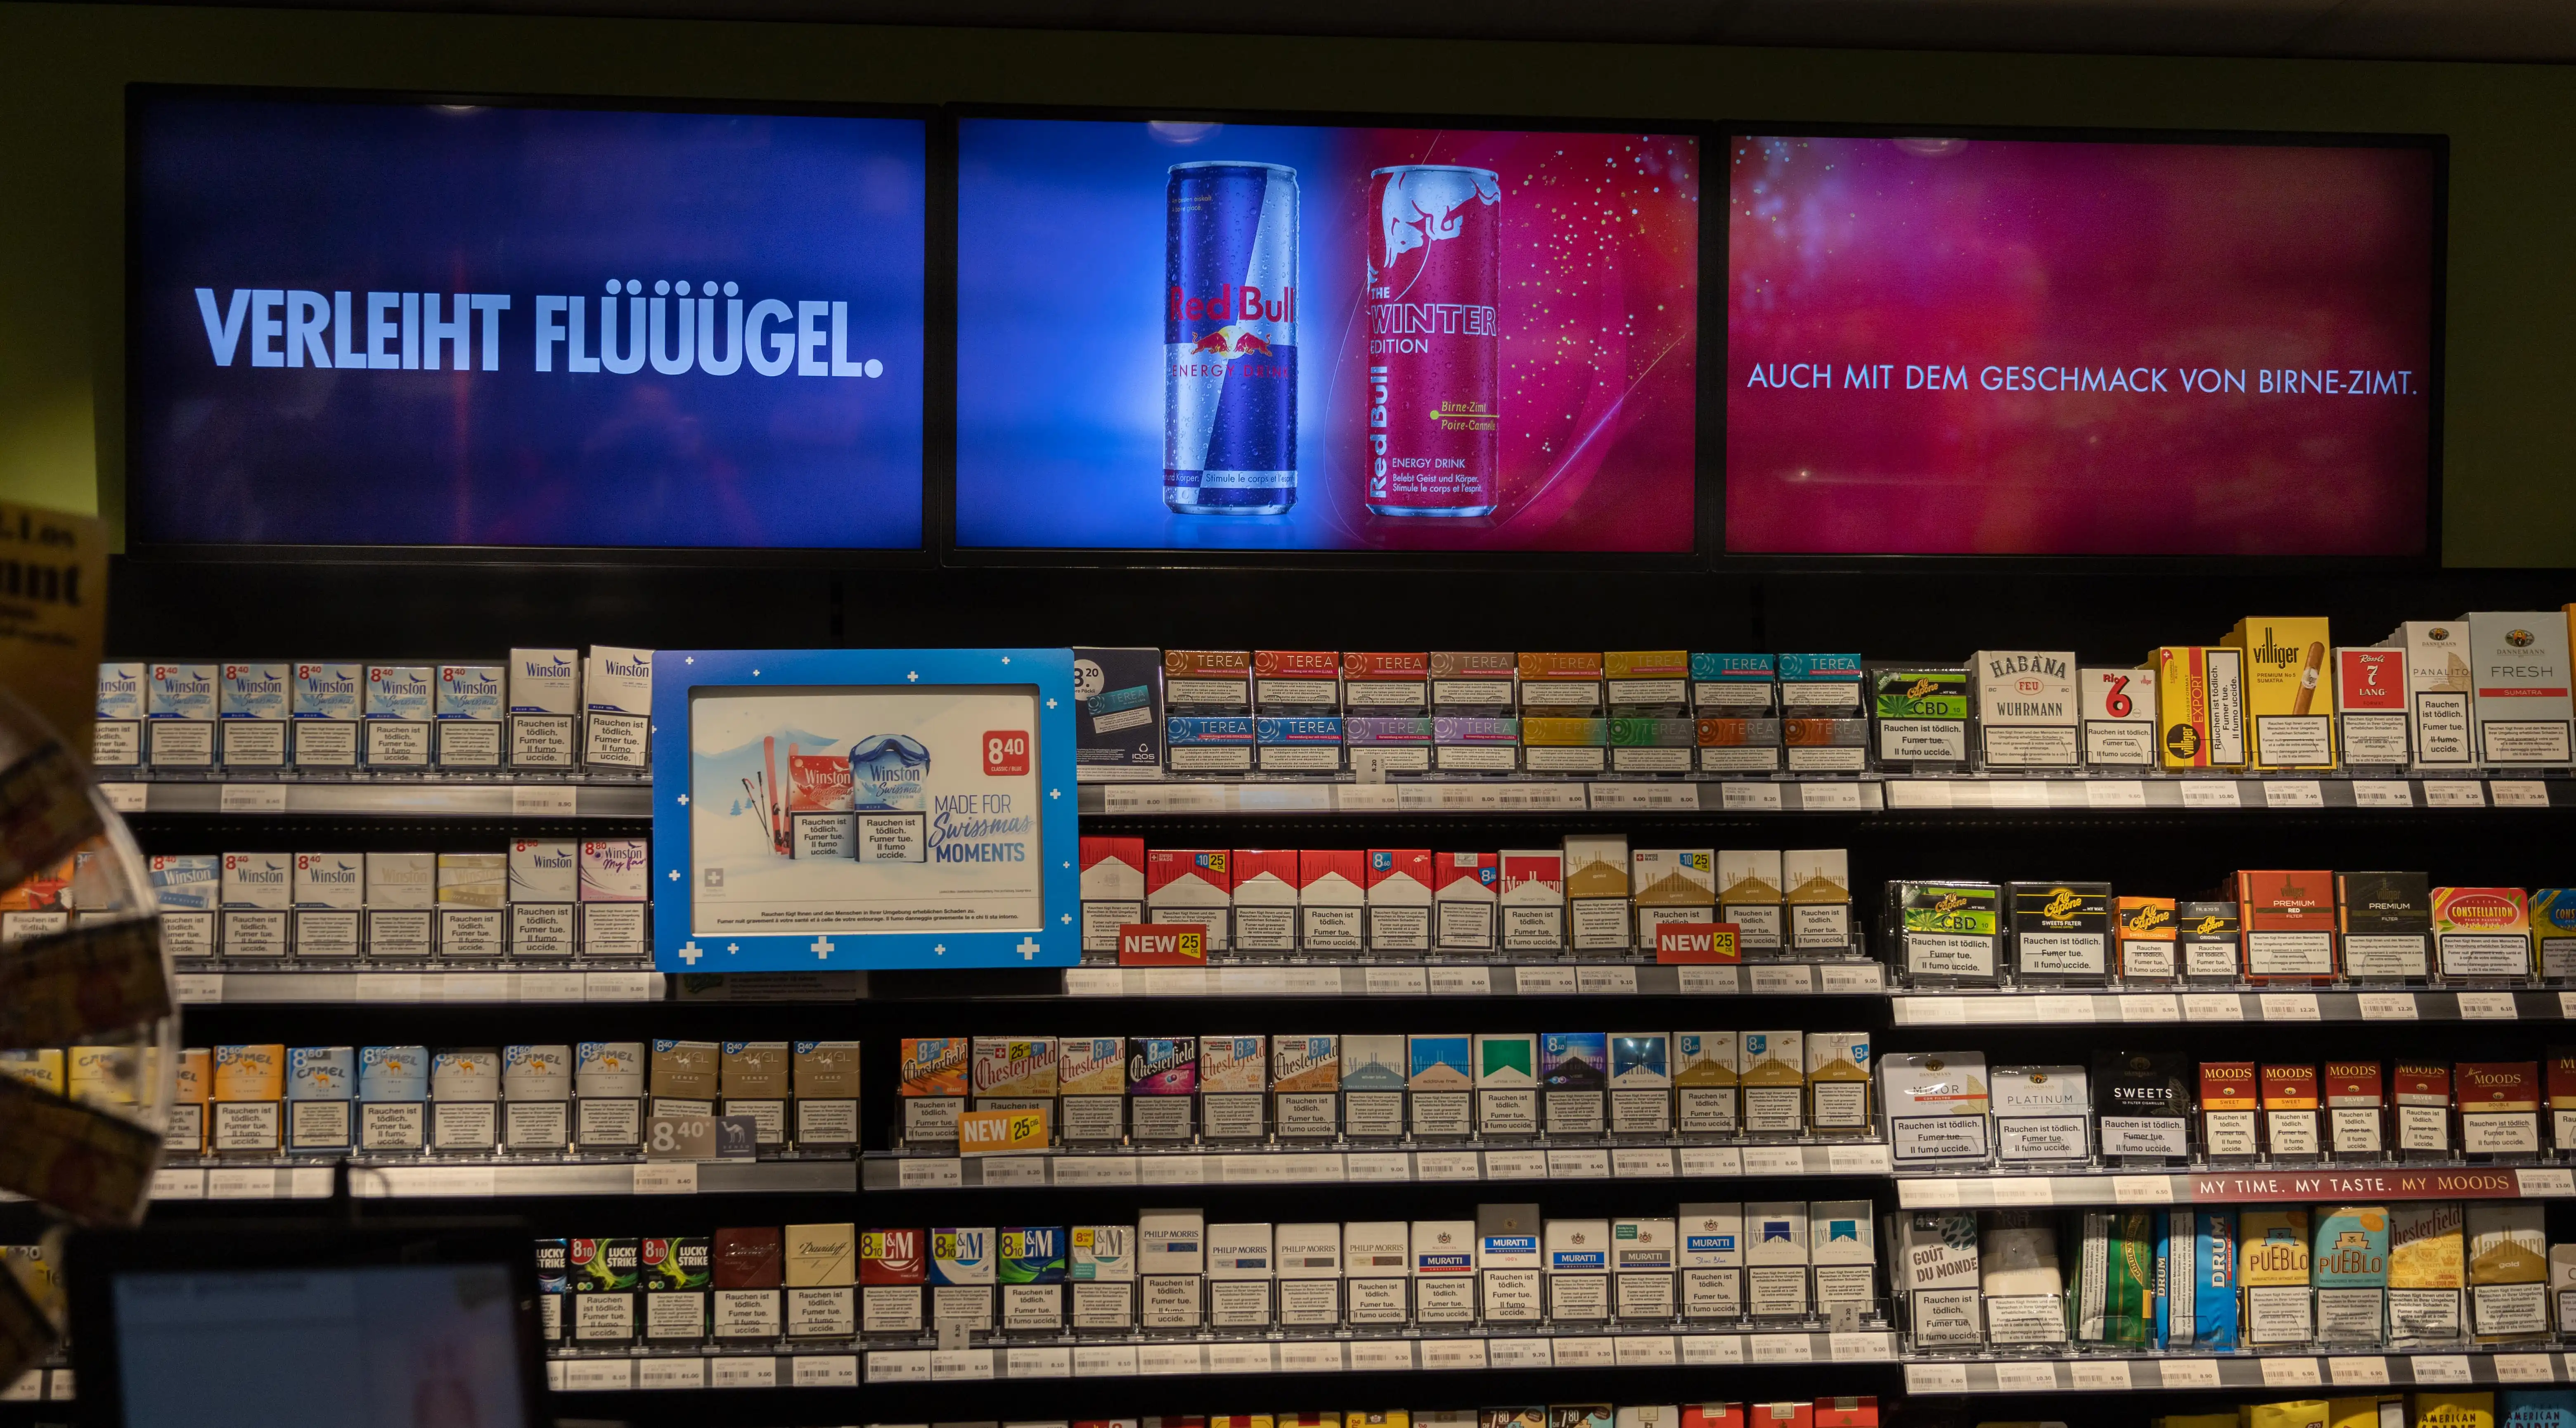 Redbull Content auf Digital Signage Kassen-Modul oberhalb Tabak-Angebot